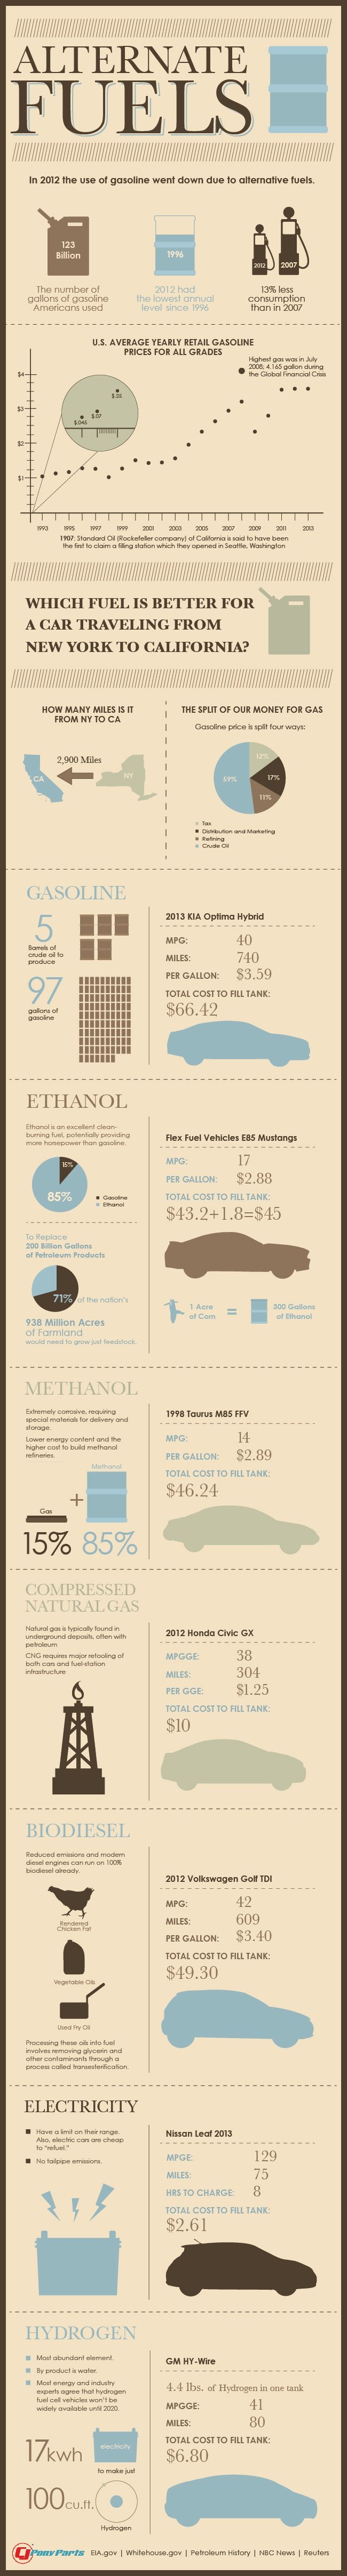 Alternate Fuels_Infographic-71